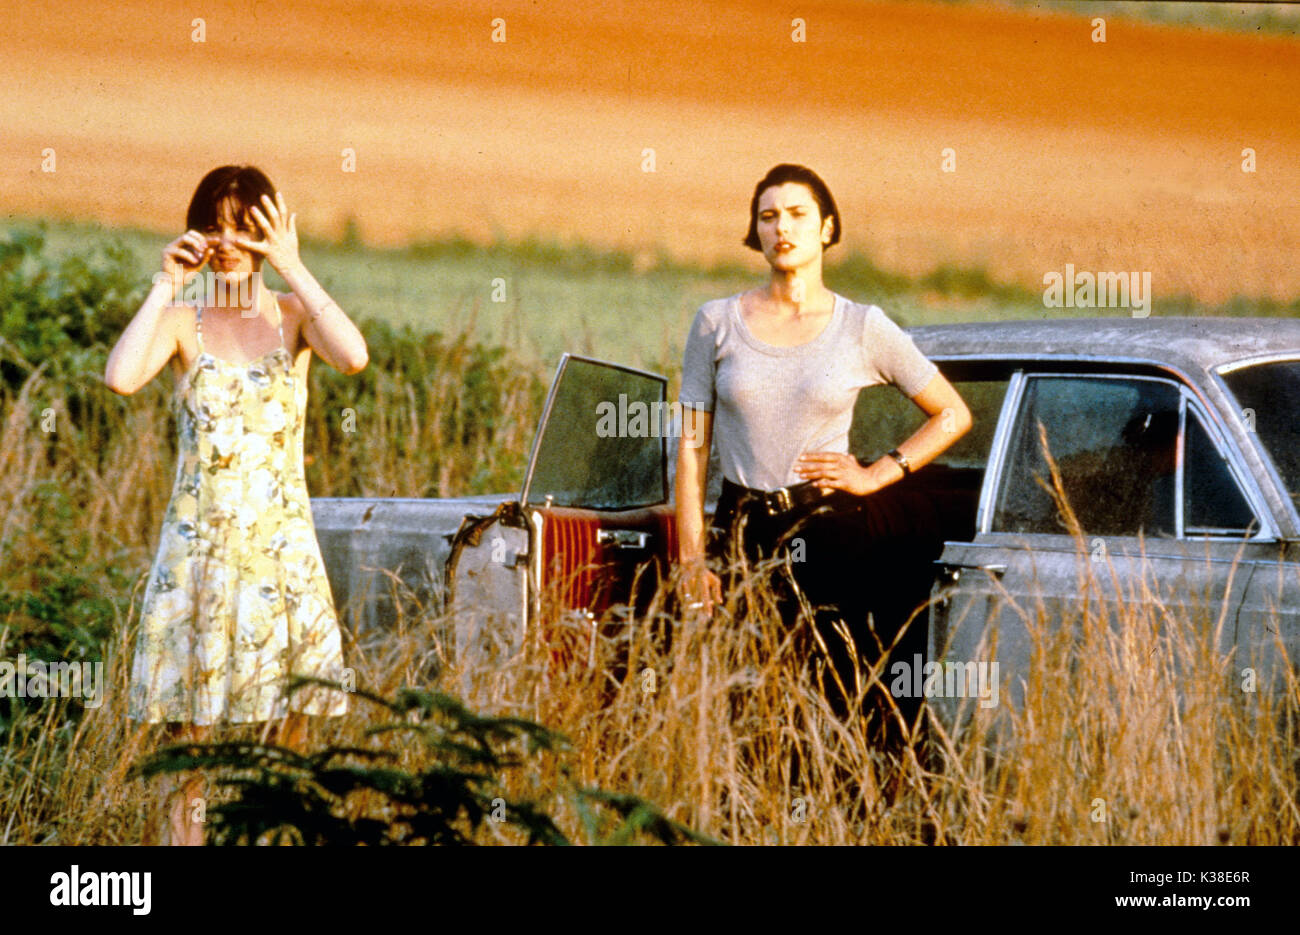 KALIFORNIA POLYGRAM FILMED ENTERTAINMENT/VIACOM RODUCTIONS/PROPAGANDA FILMS JULIETTE LEWIS, MICHELLE FORBES     Date: 1993 Stock Photo